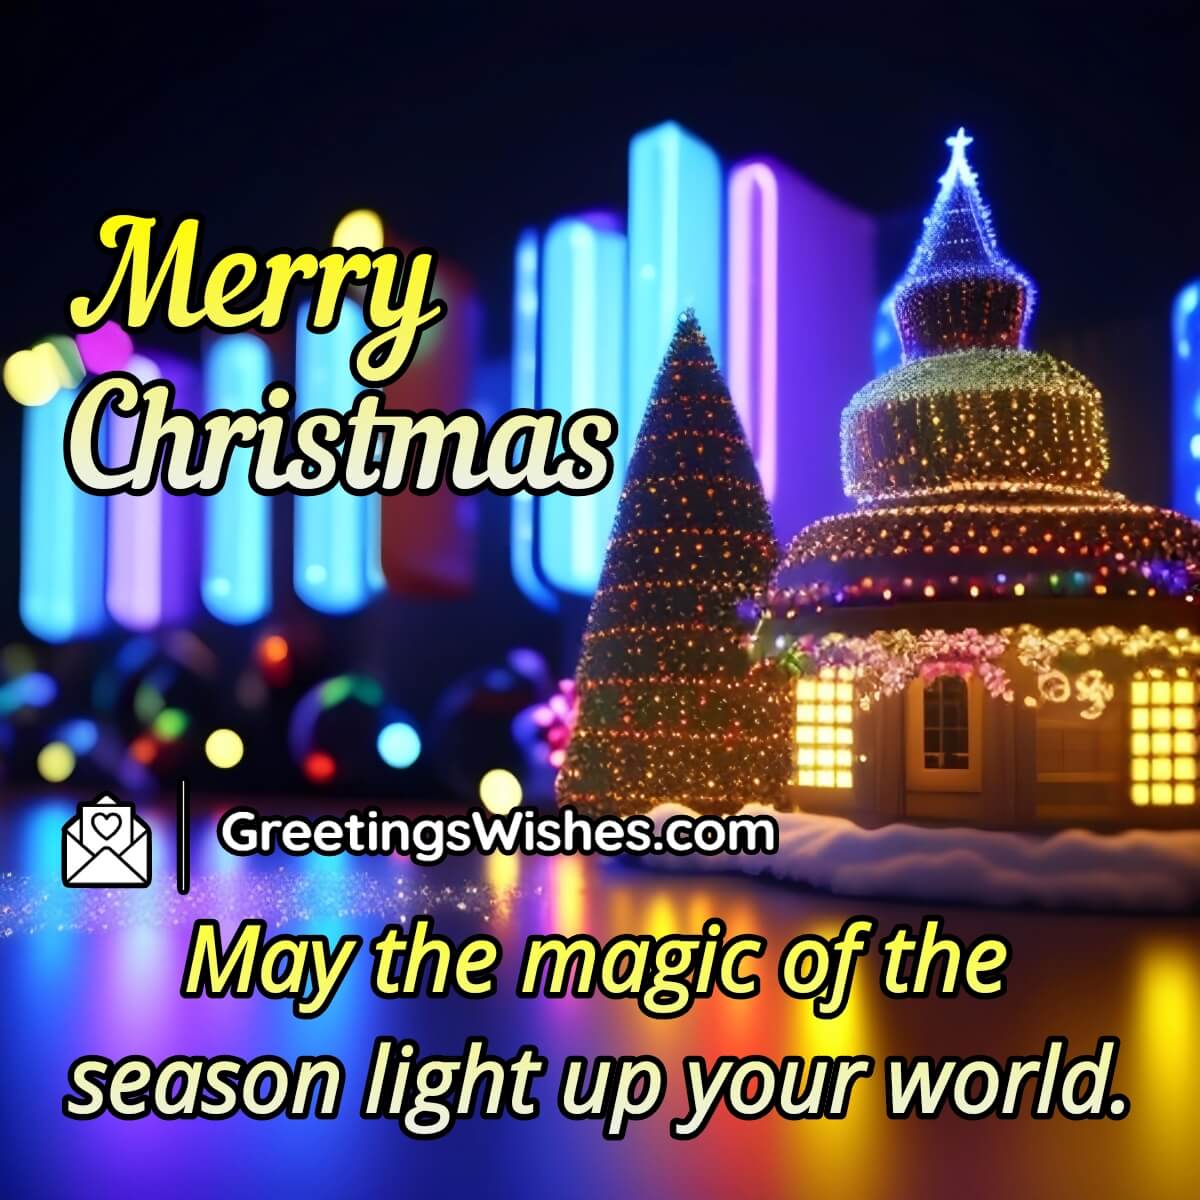 Merry Christmas Greetings (25th December)